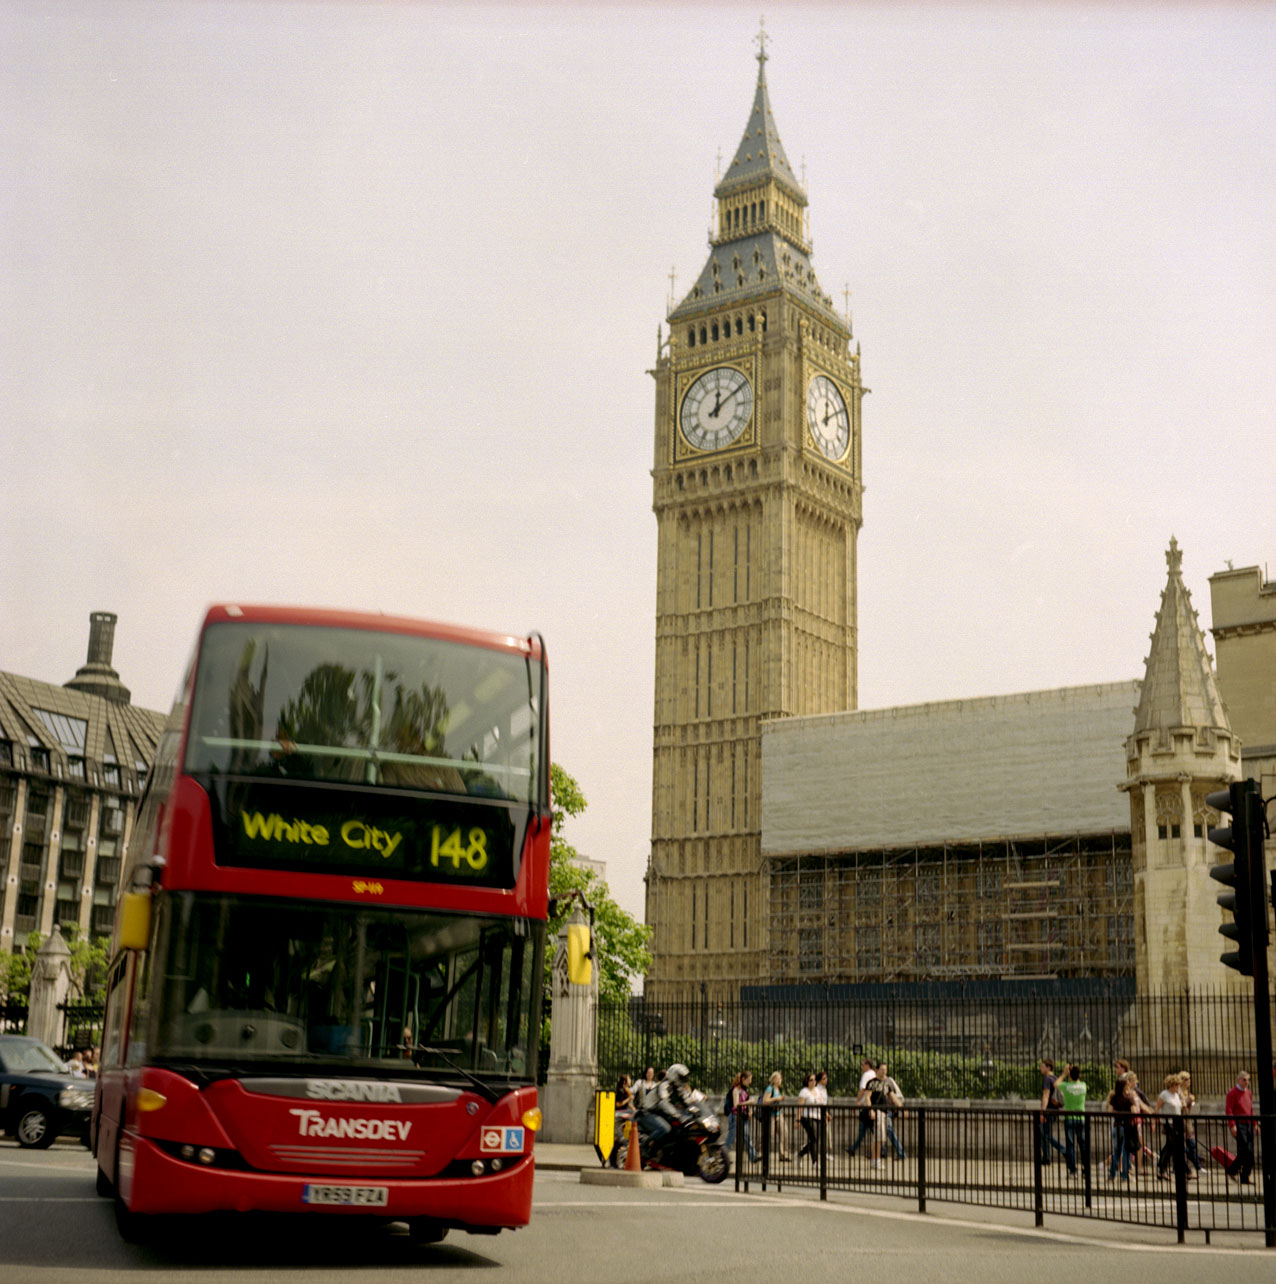 fotka / image Big Ben, Summer in London